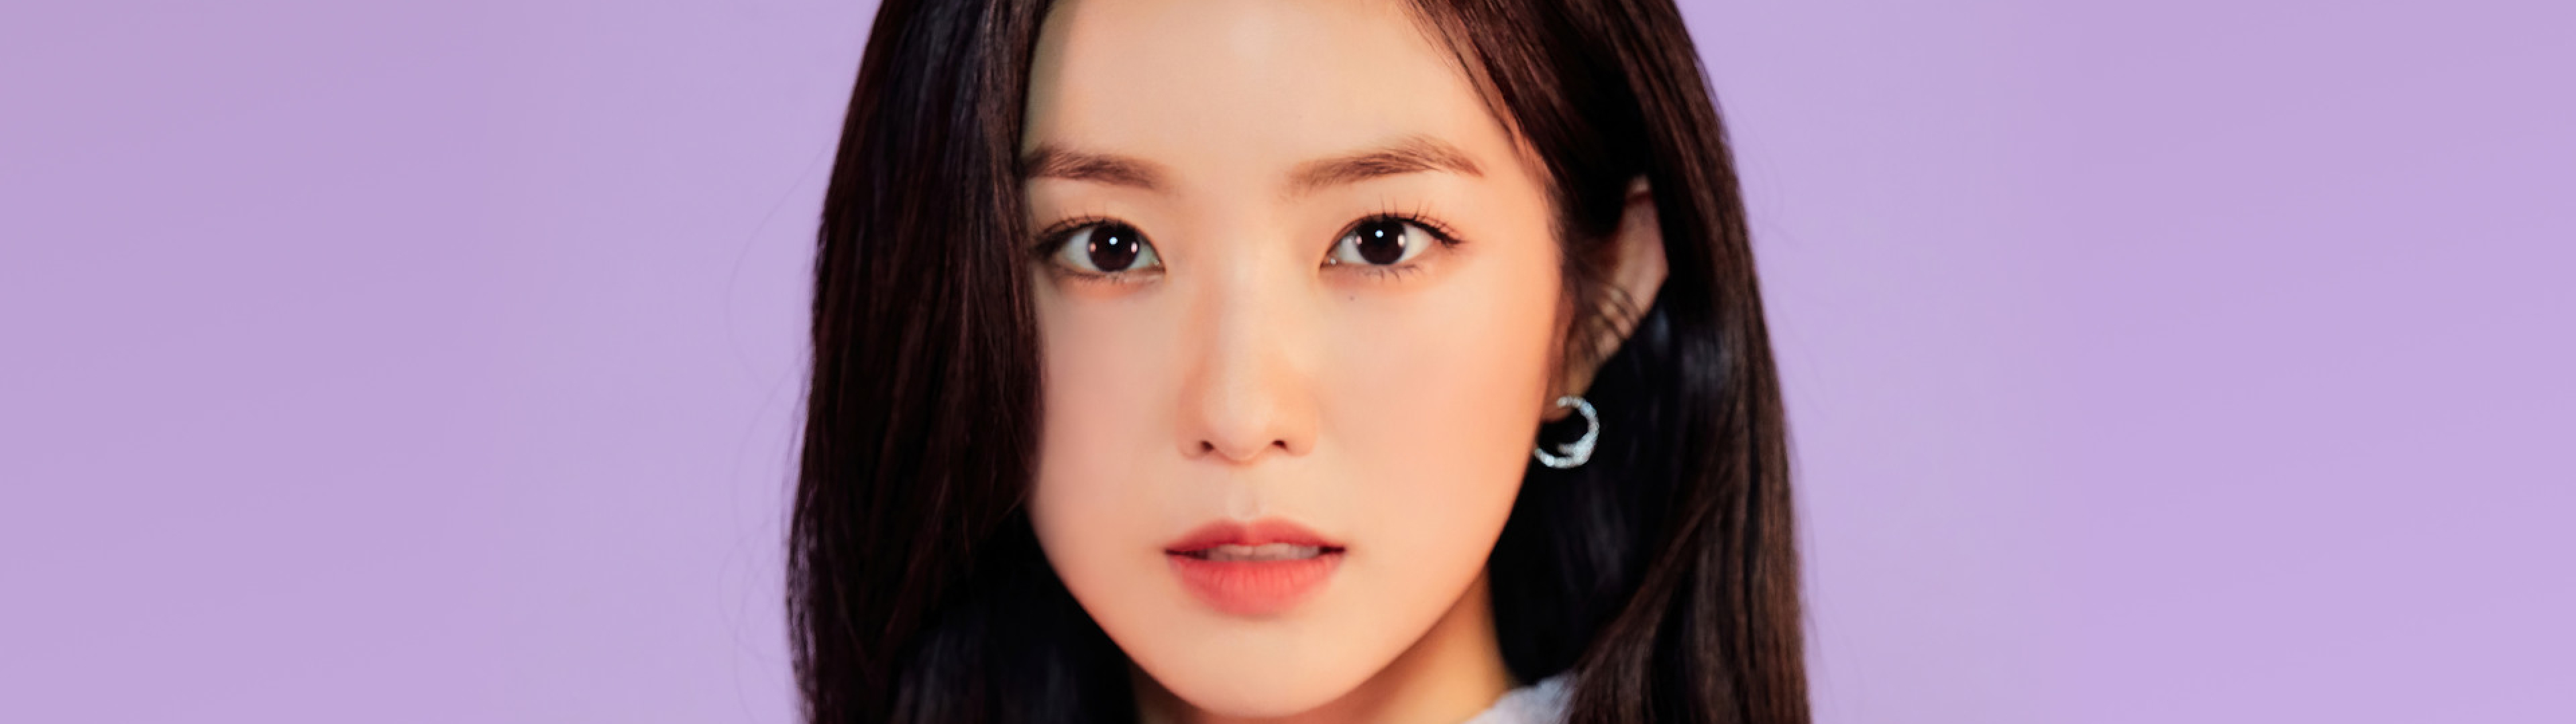 3840x1080 Resolution Irene Bae Joo hyun Red Velvet Face 3840x1080 ...